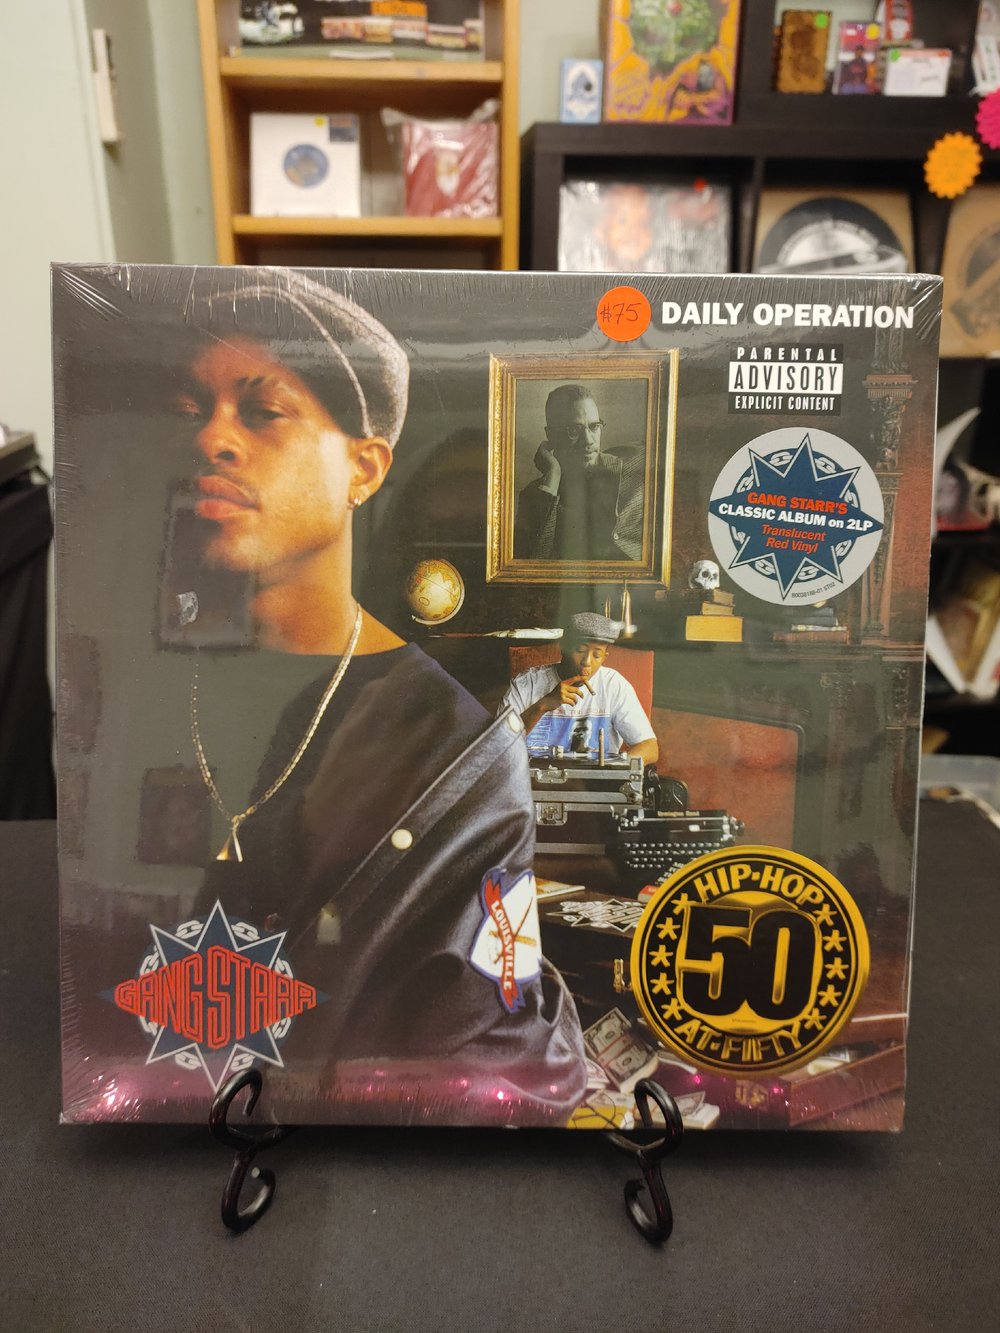 Gang Starr - Daily Operation Vinyl 